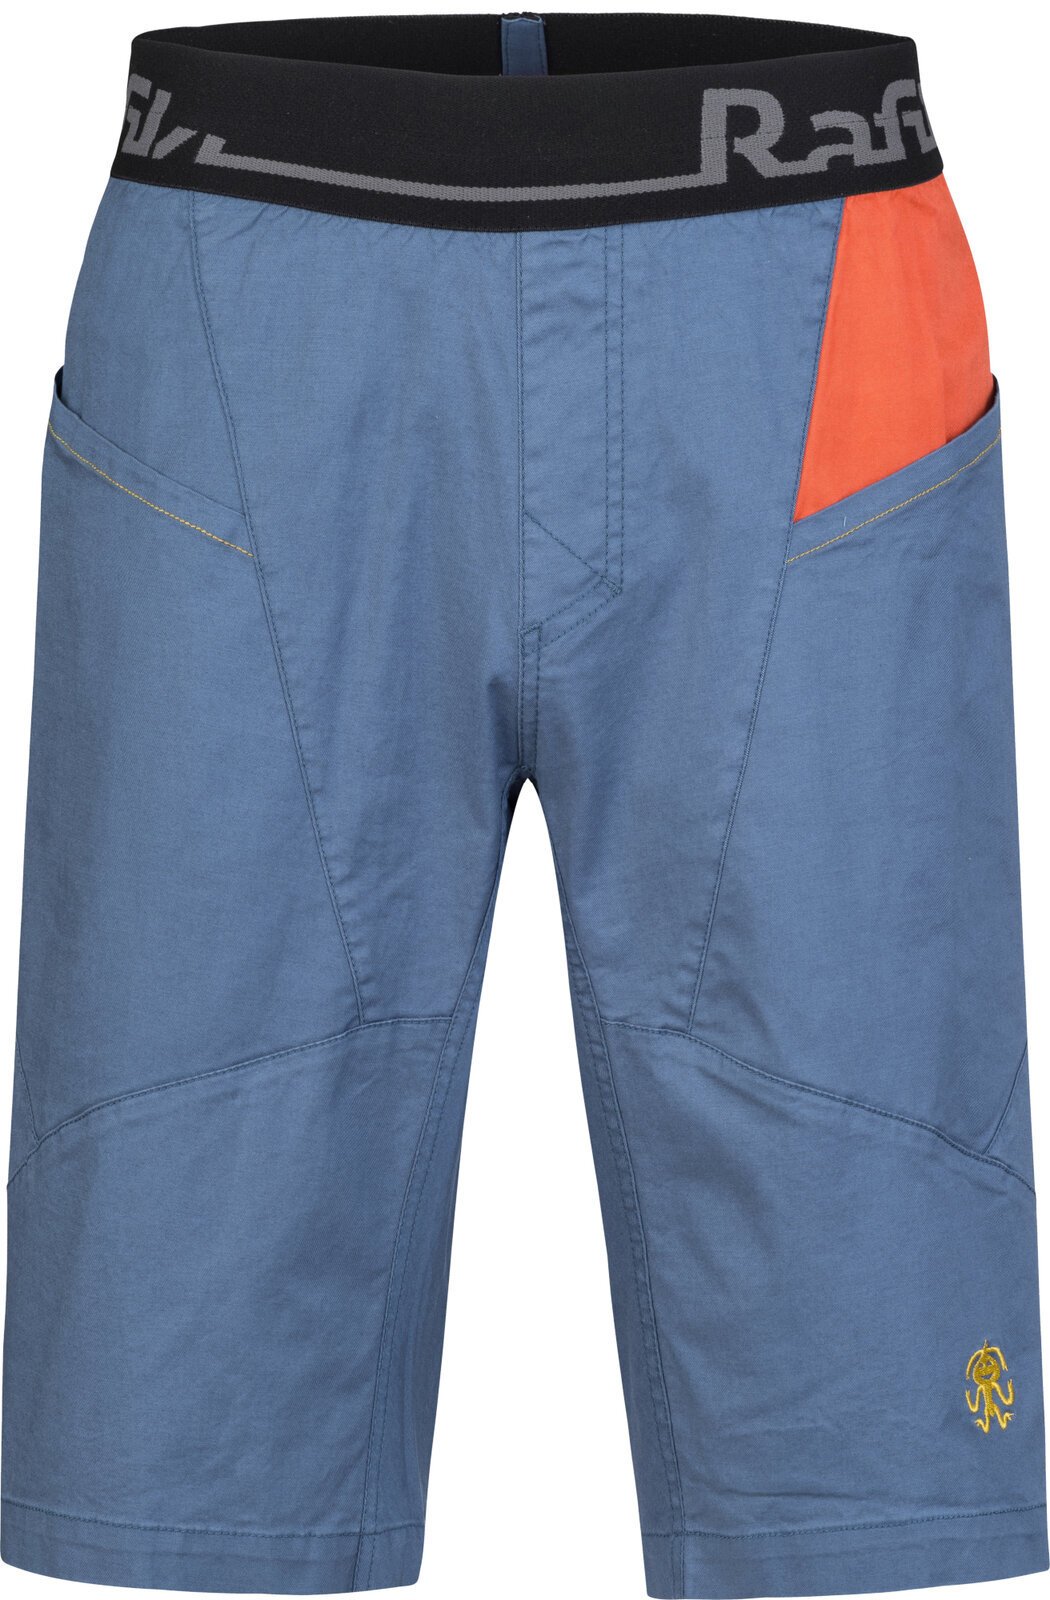 Outdoorshorts Rafiki Megos Man Shorts Ensign Blue/Clay XS Outdoorshorts